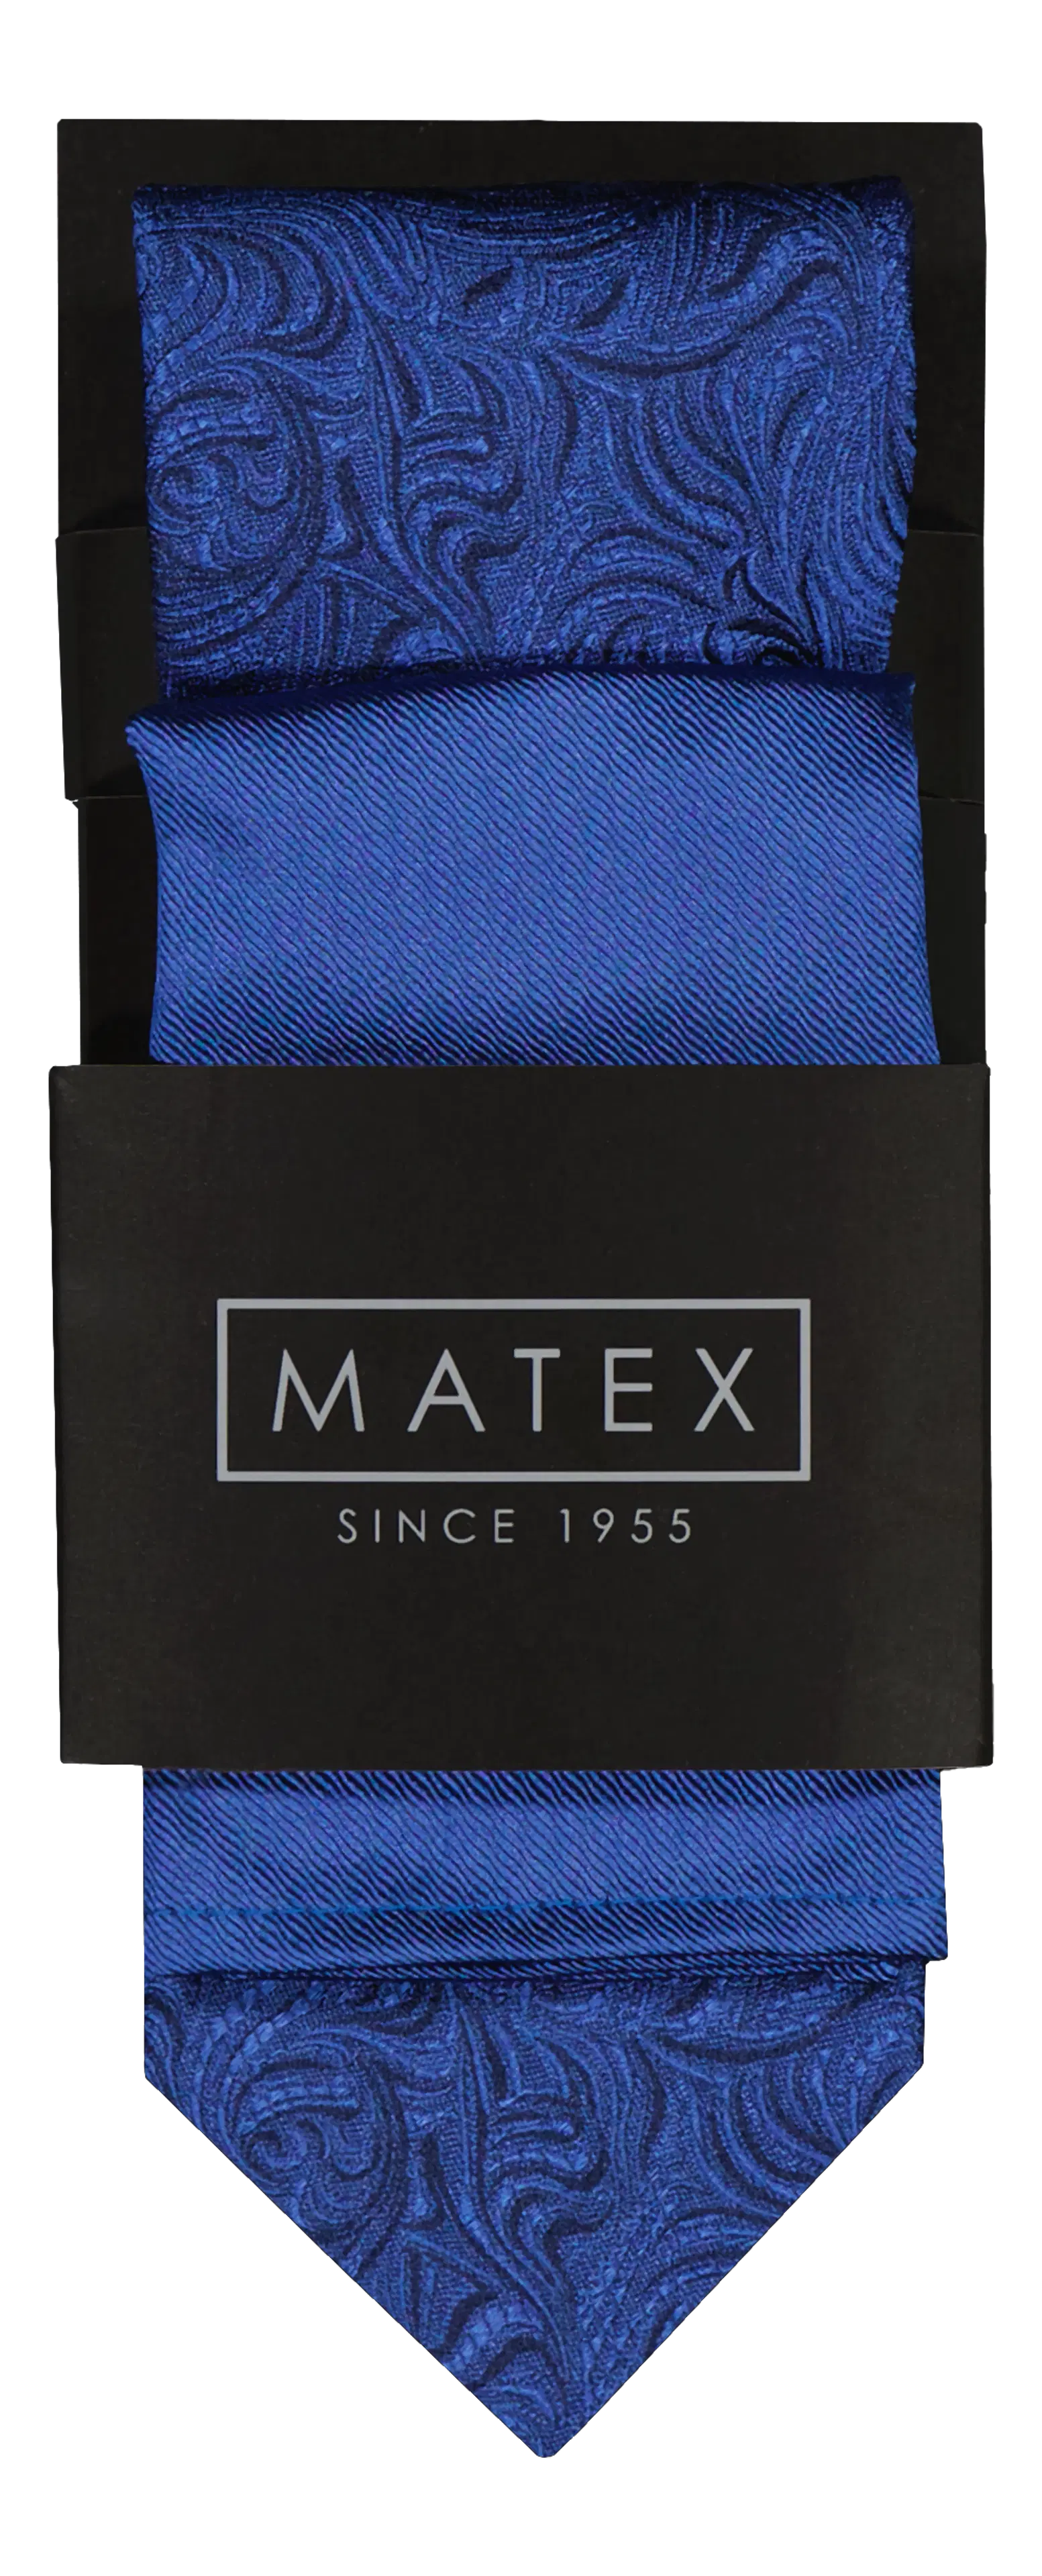 Matex solmio ja taskuliina